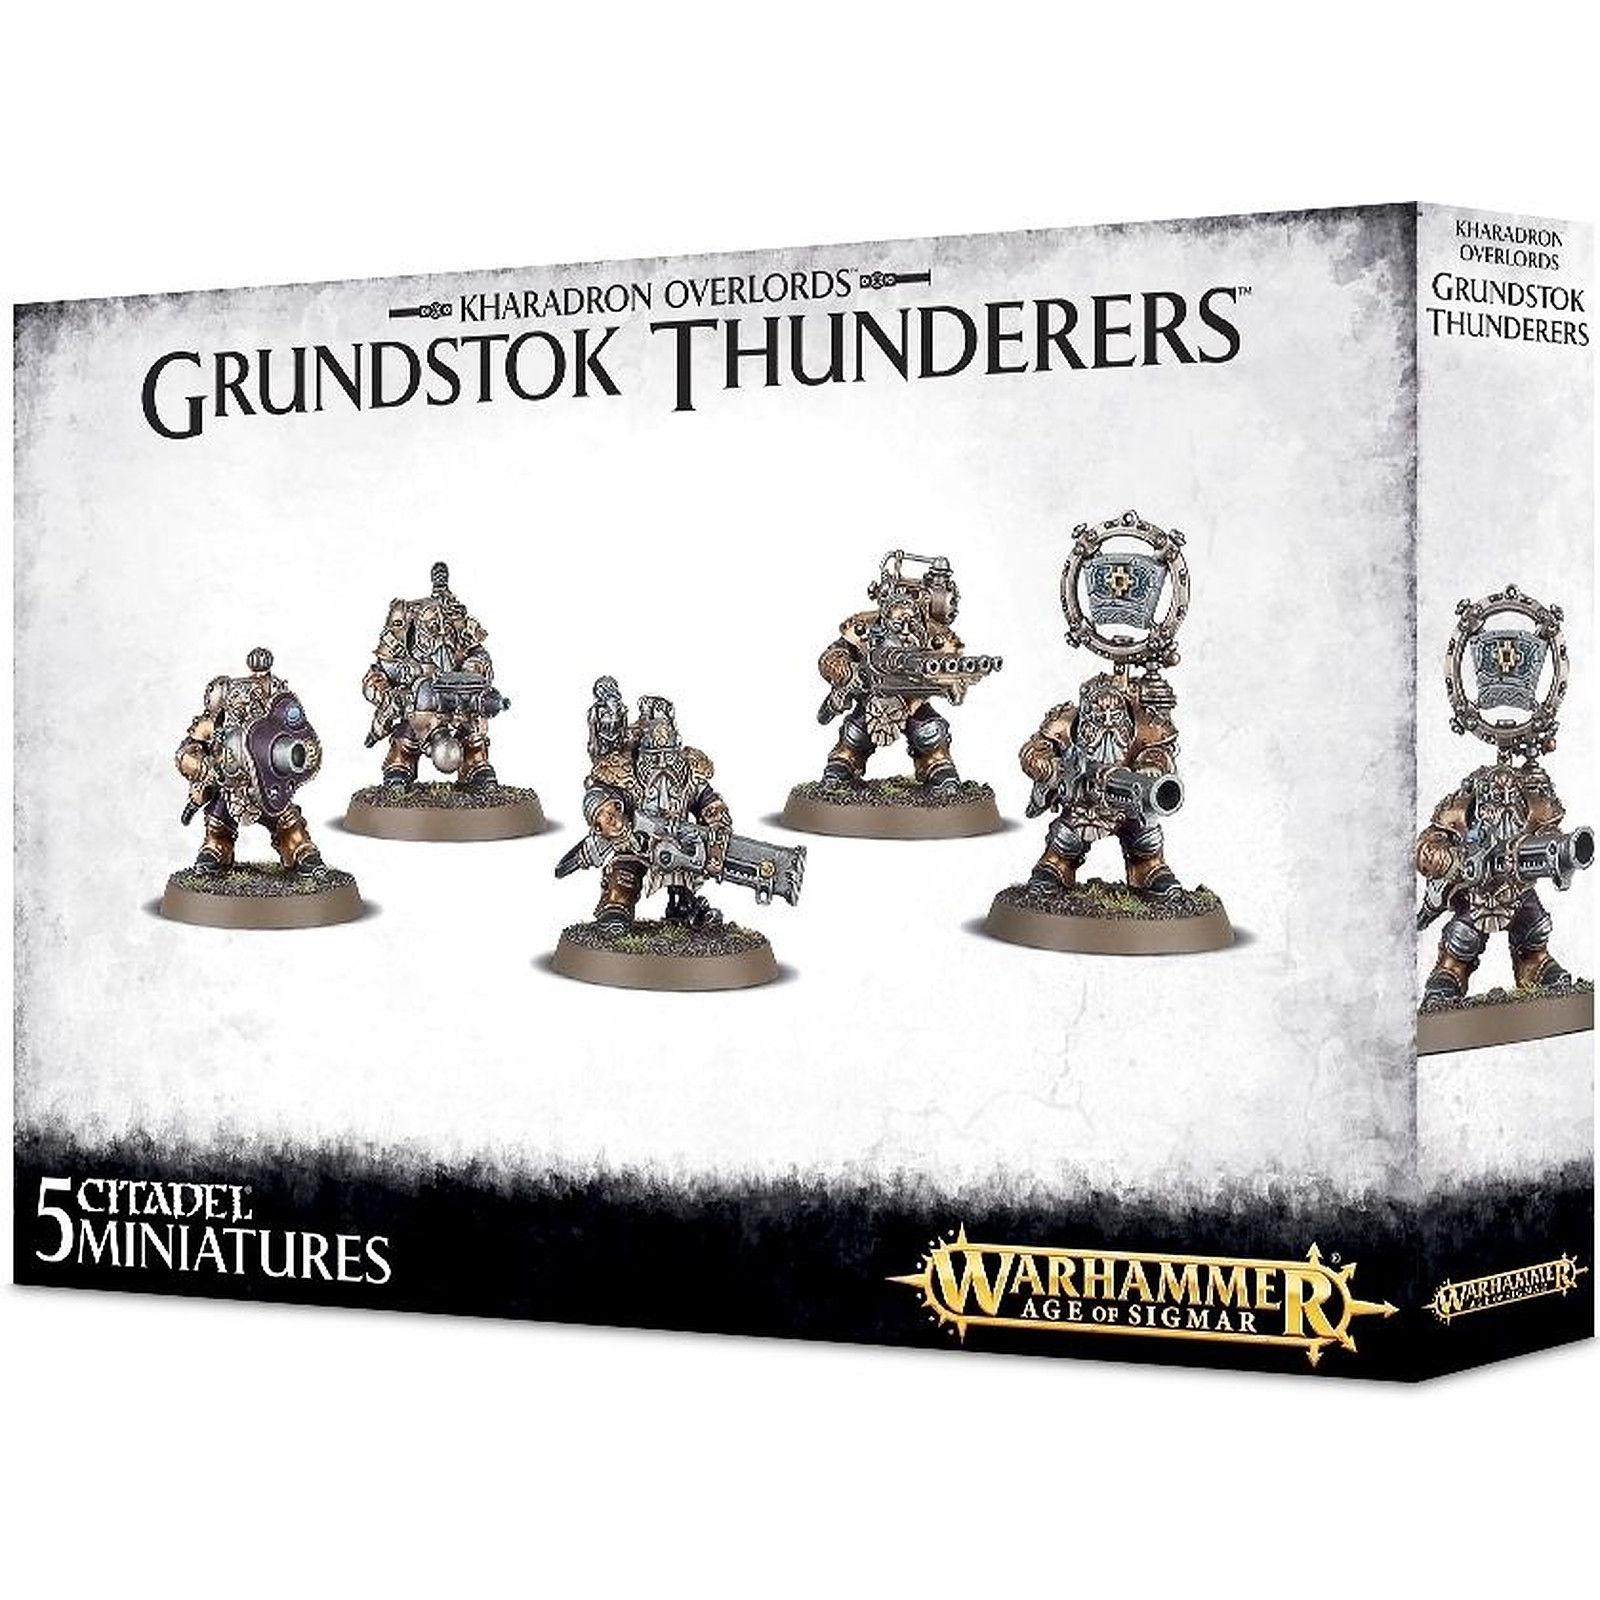 Warhammer AoS - Kharadron Overlords Grundstok Thunderers - Jeux de figurines Games workshop